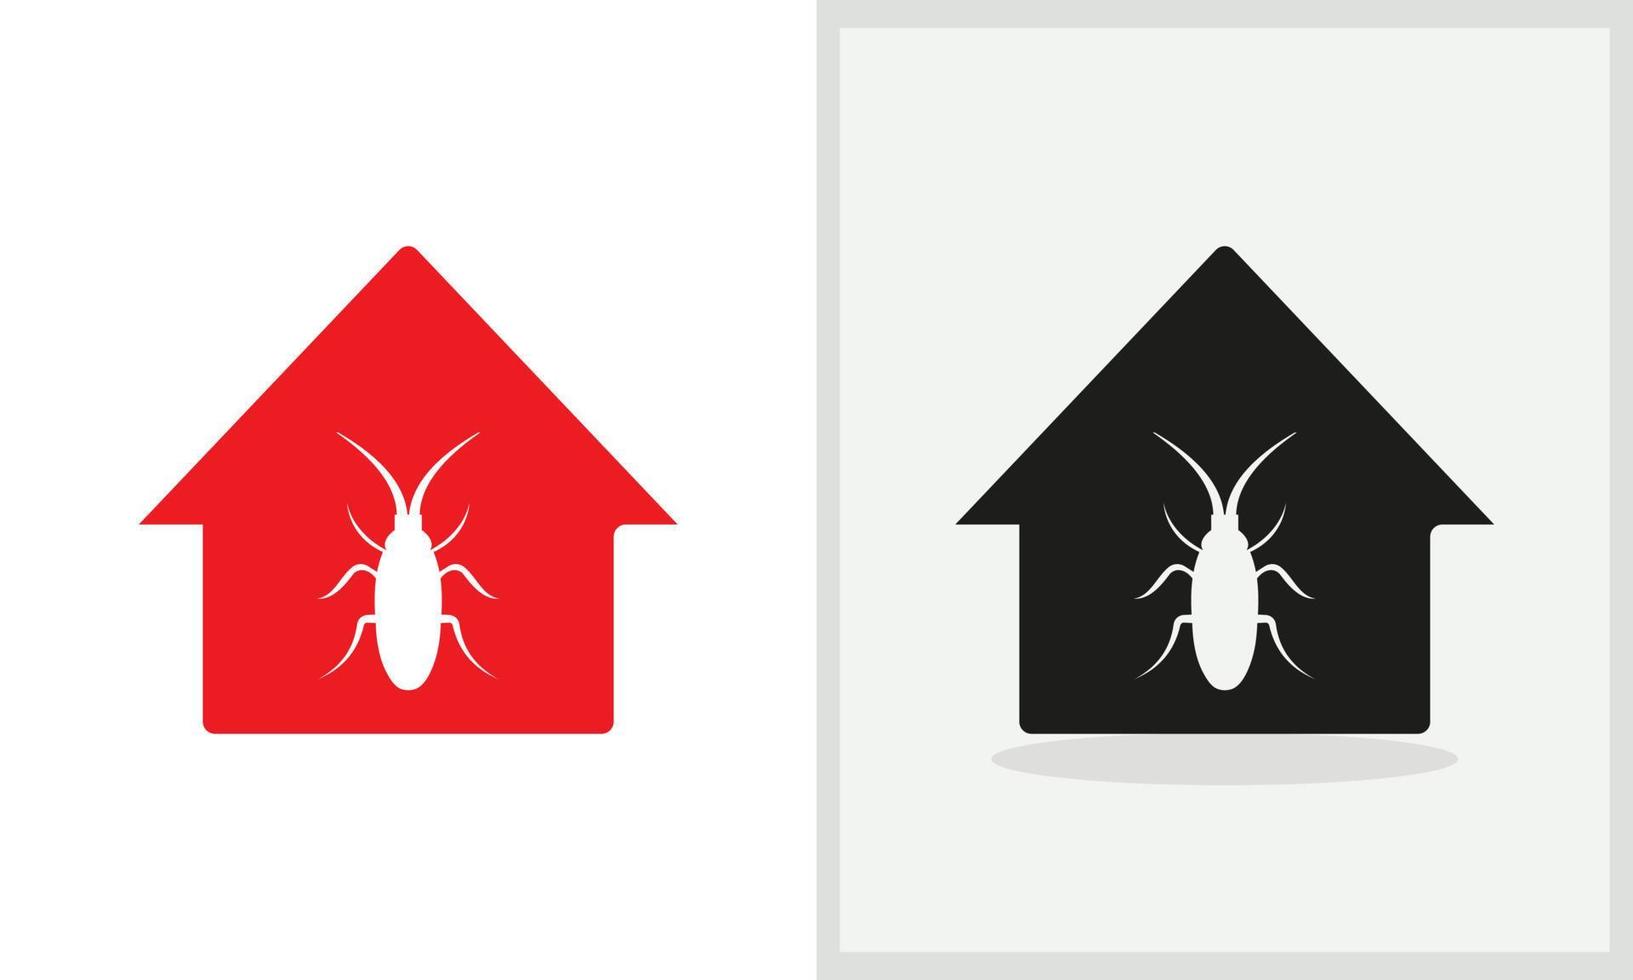 seme insetto Casa logo design. casa logo con seme insetto concetto vettore. seme insetto e casa logo design vettore